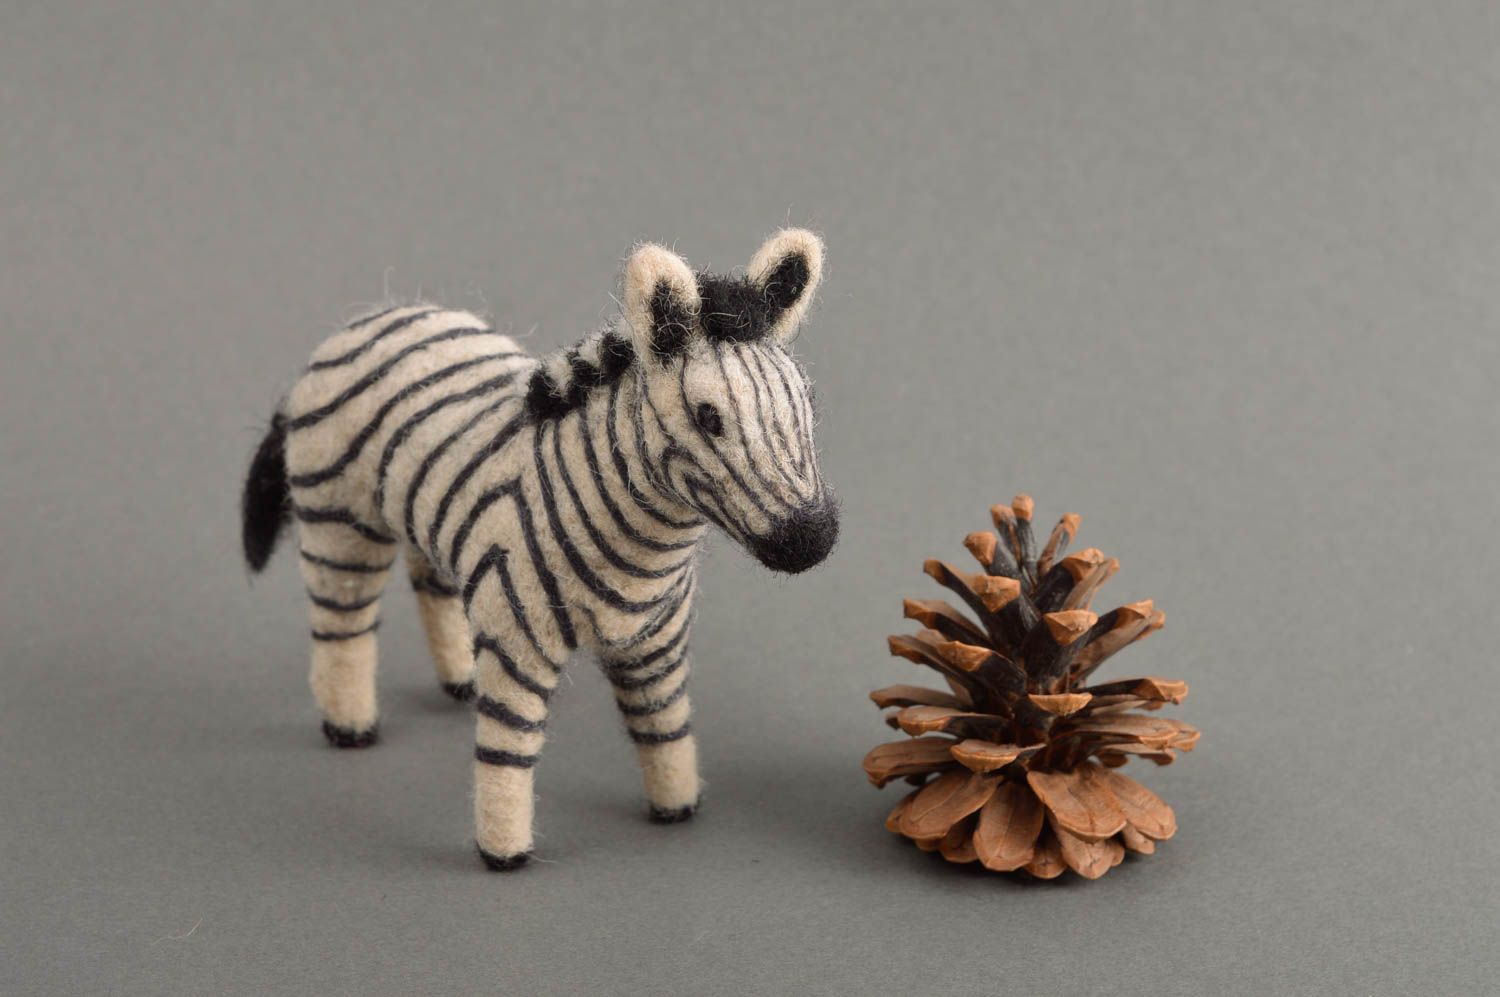 Handmade toy designer toy for baby nursery decor ideas woolen animal toy photo 1